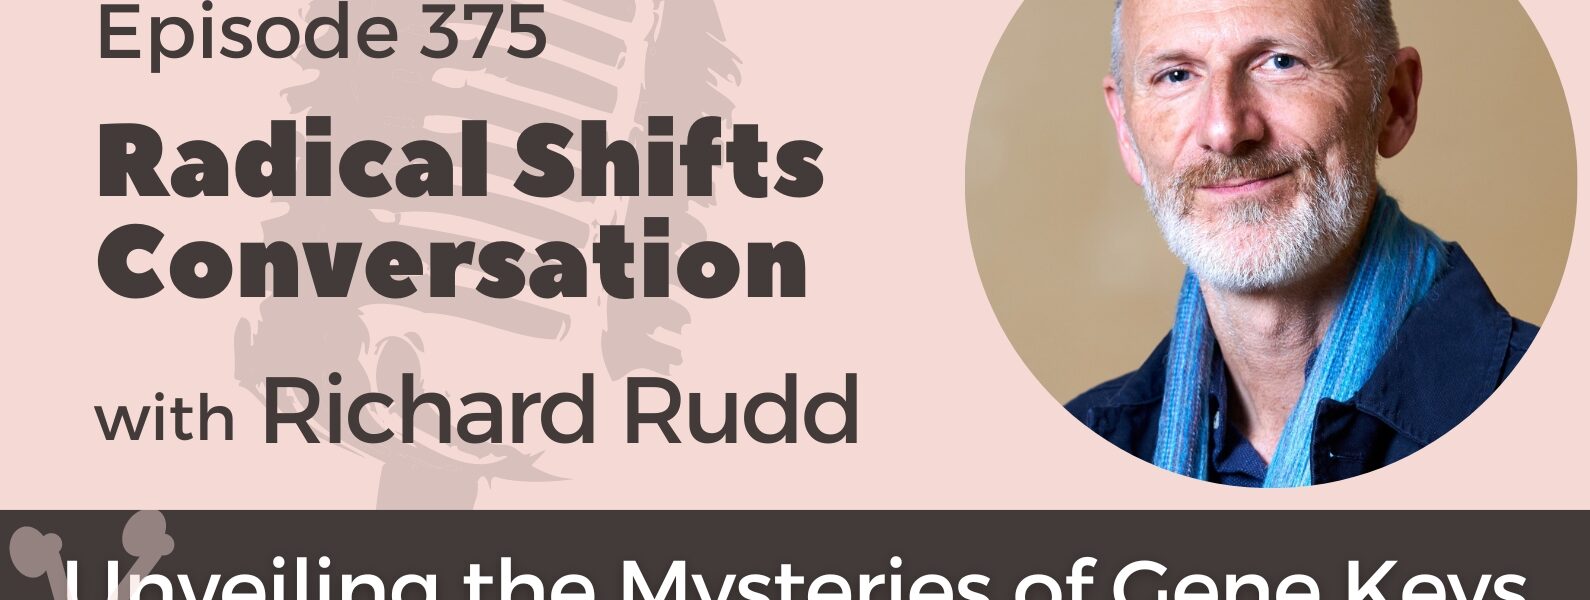 Richard Rudd